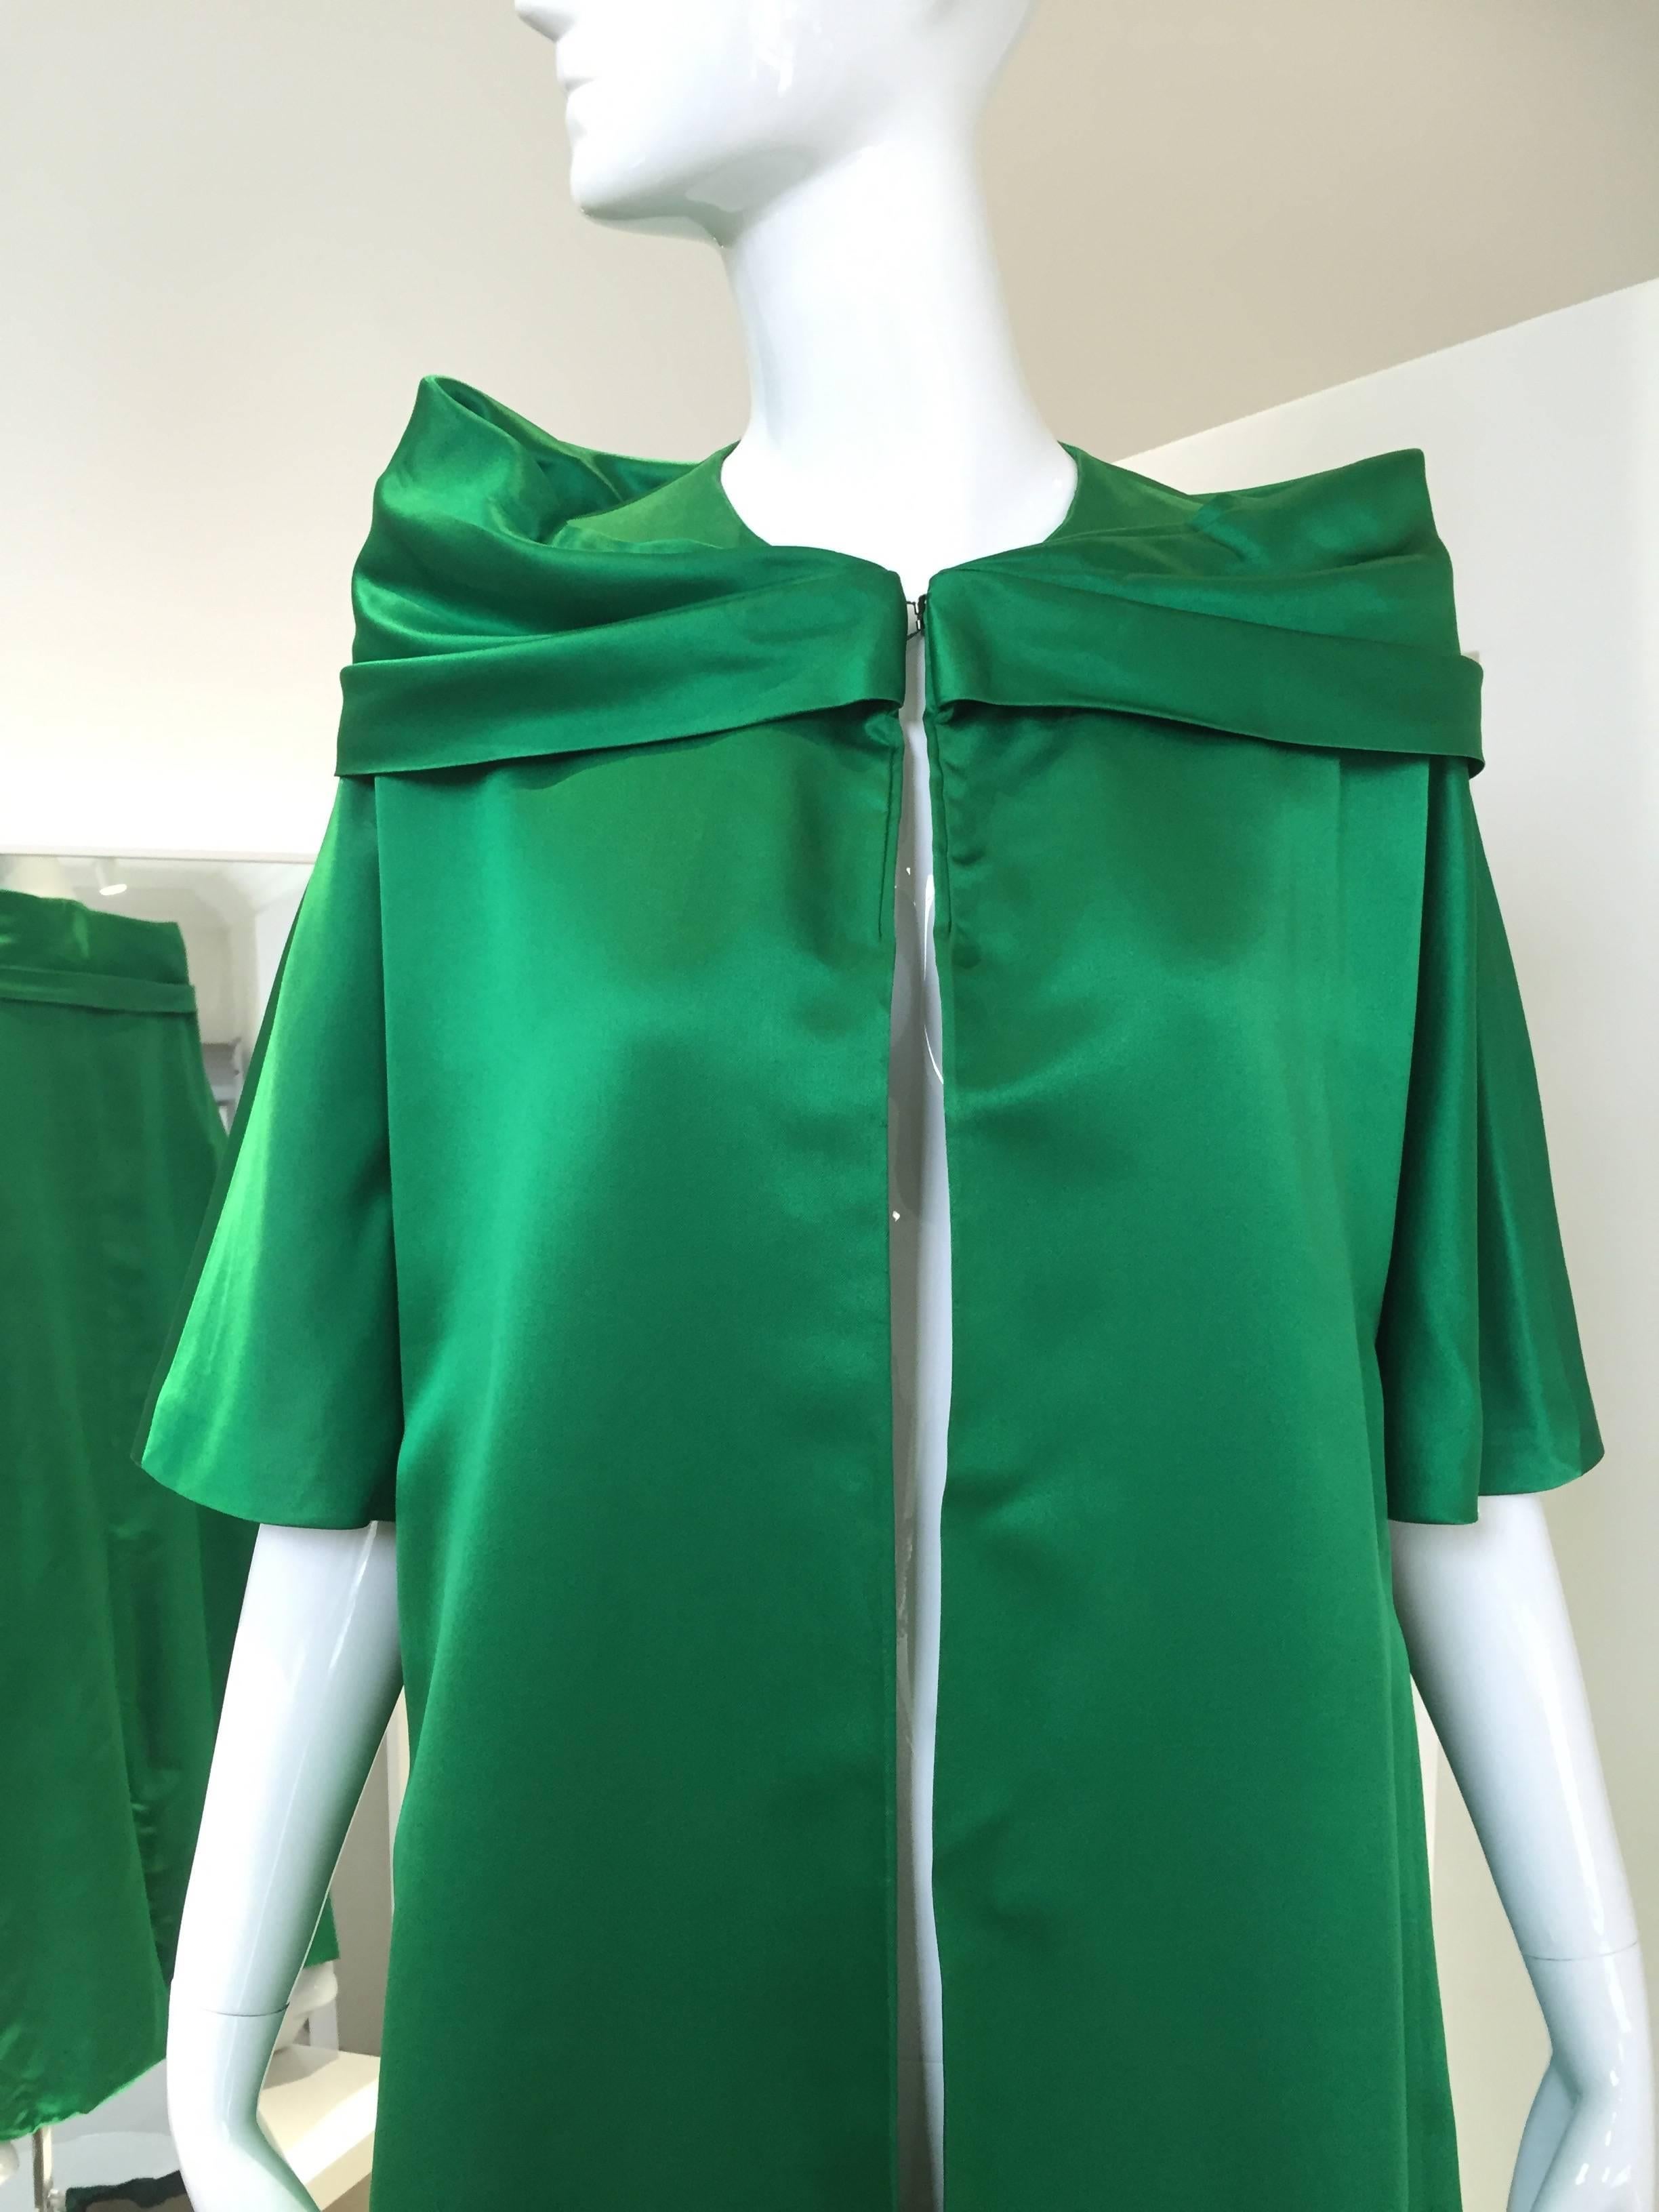 1960s Montaldo emerald green silk satin evening coat.
BUST; 38